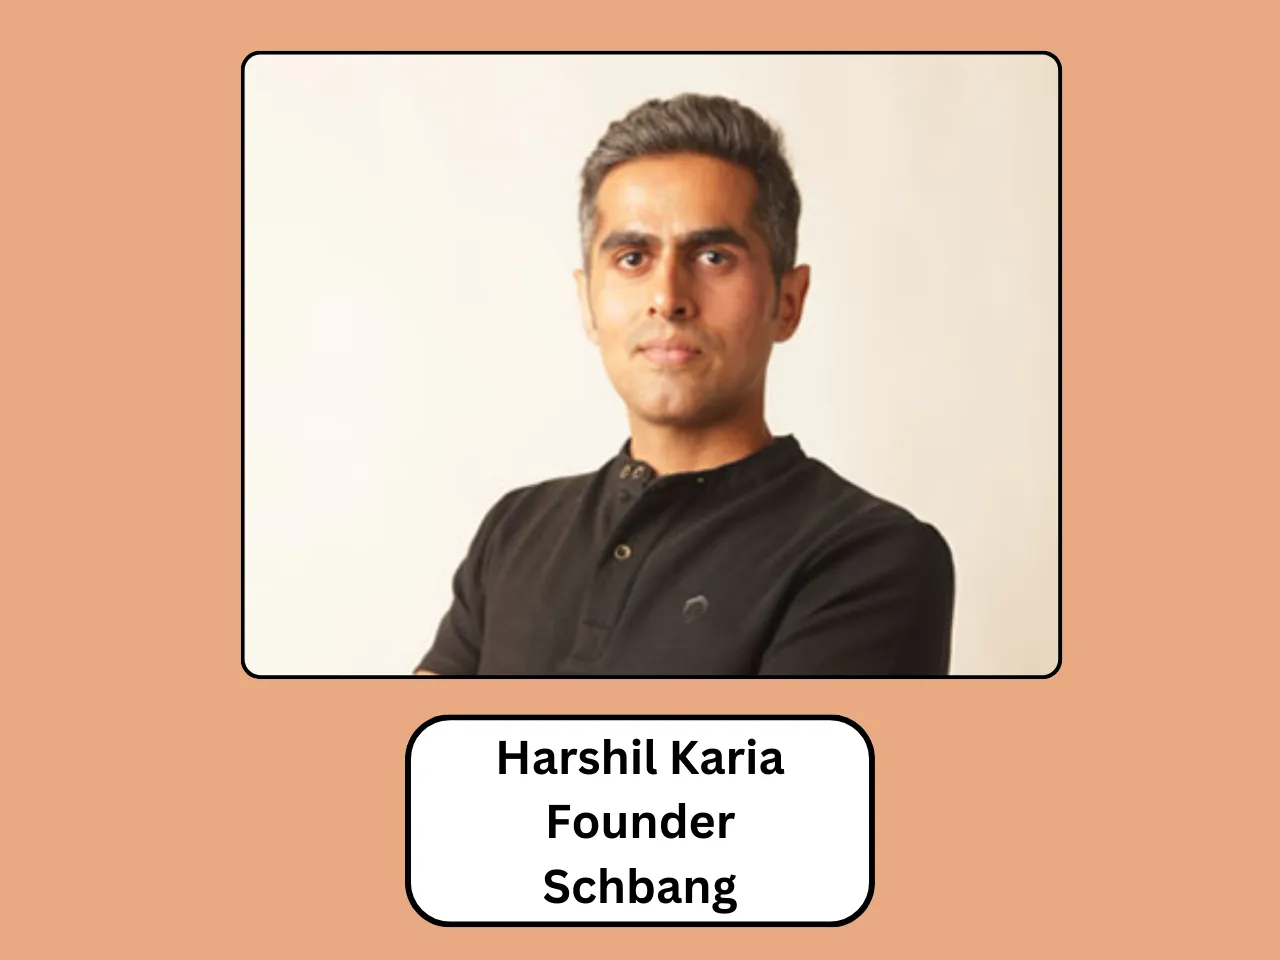 We're set to enter second international market in the upcoming quarter: Schbang’s Harshil Karia